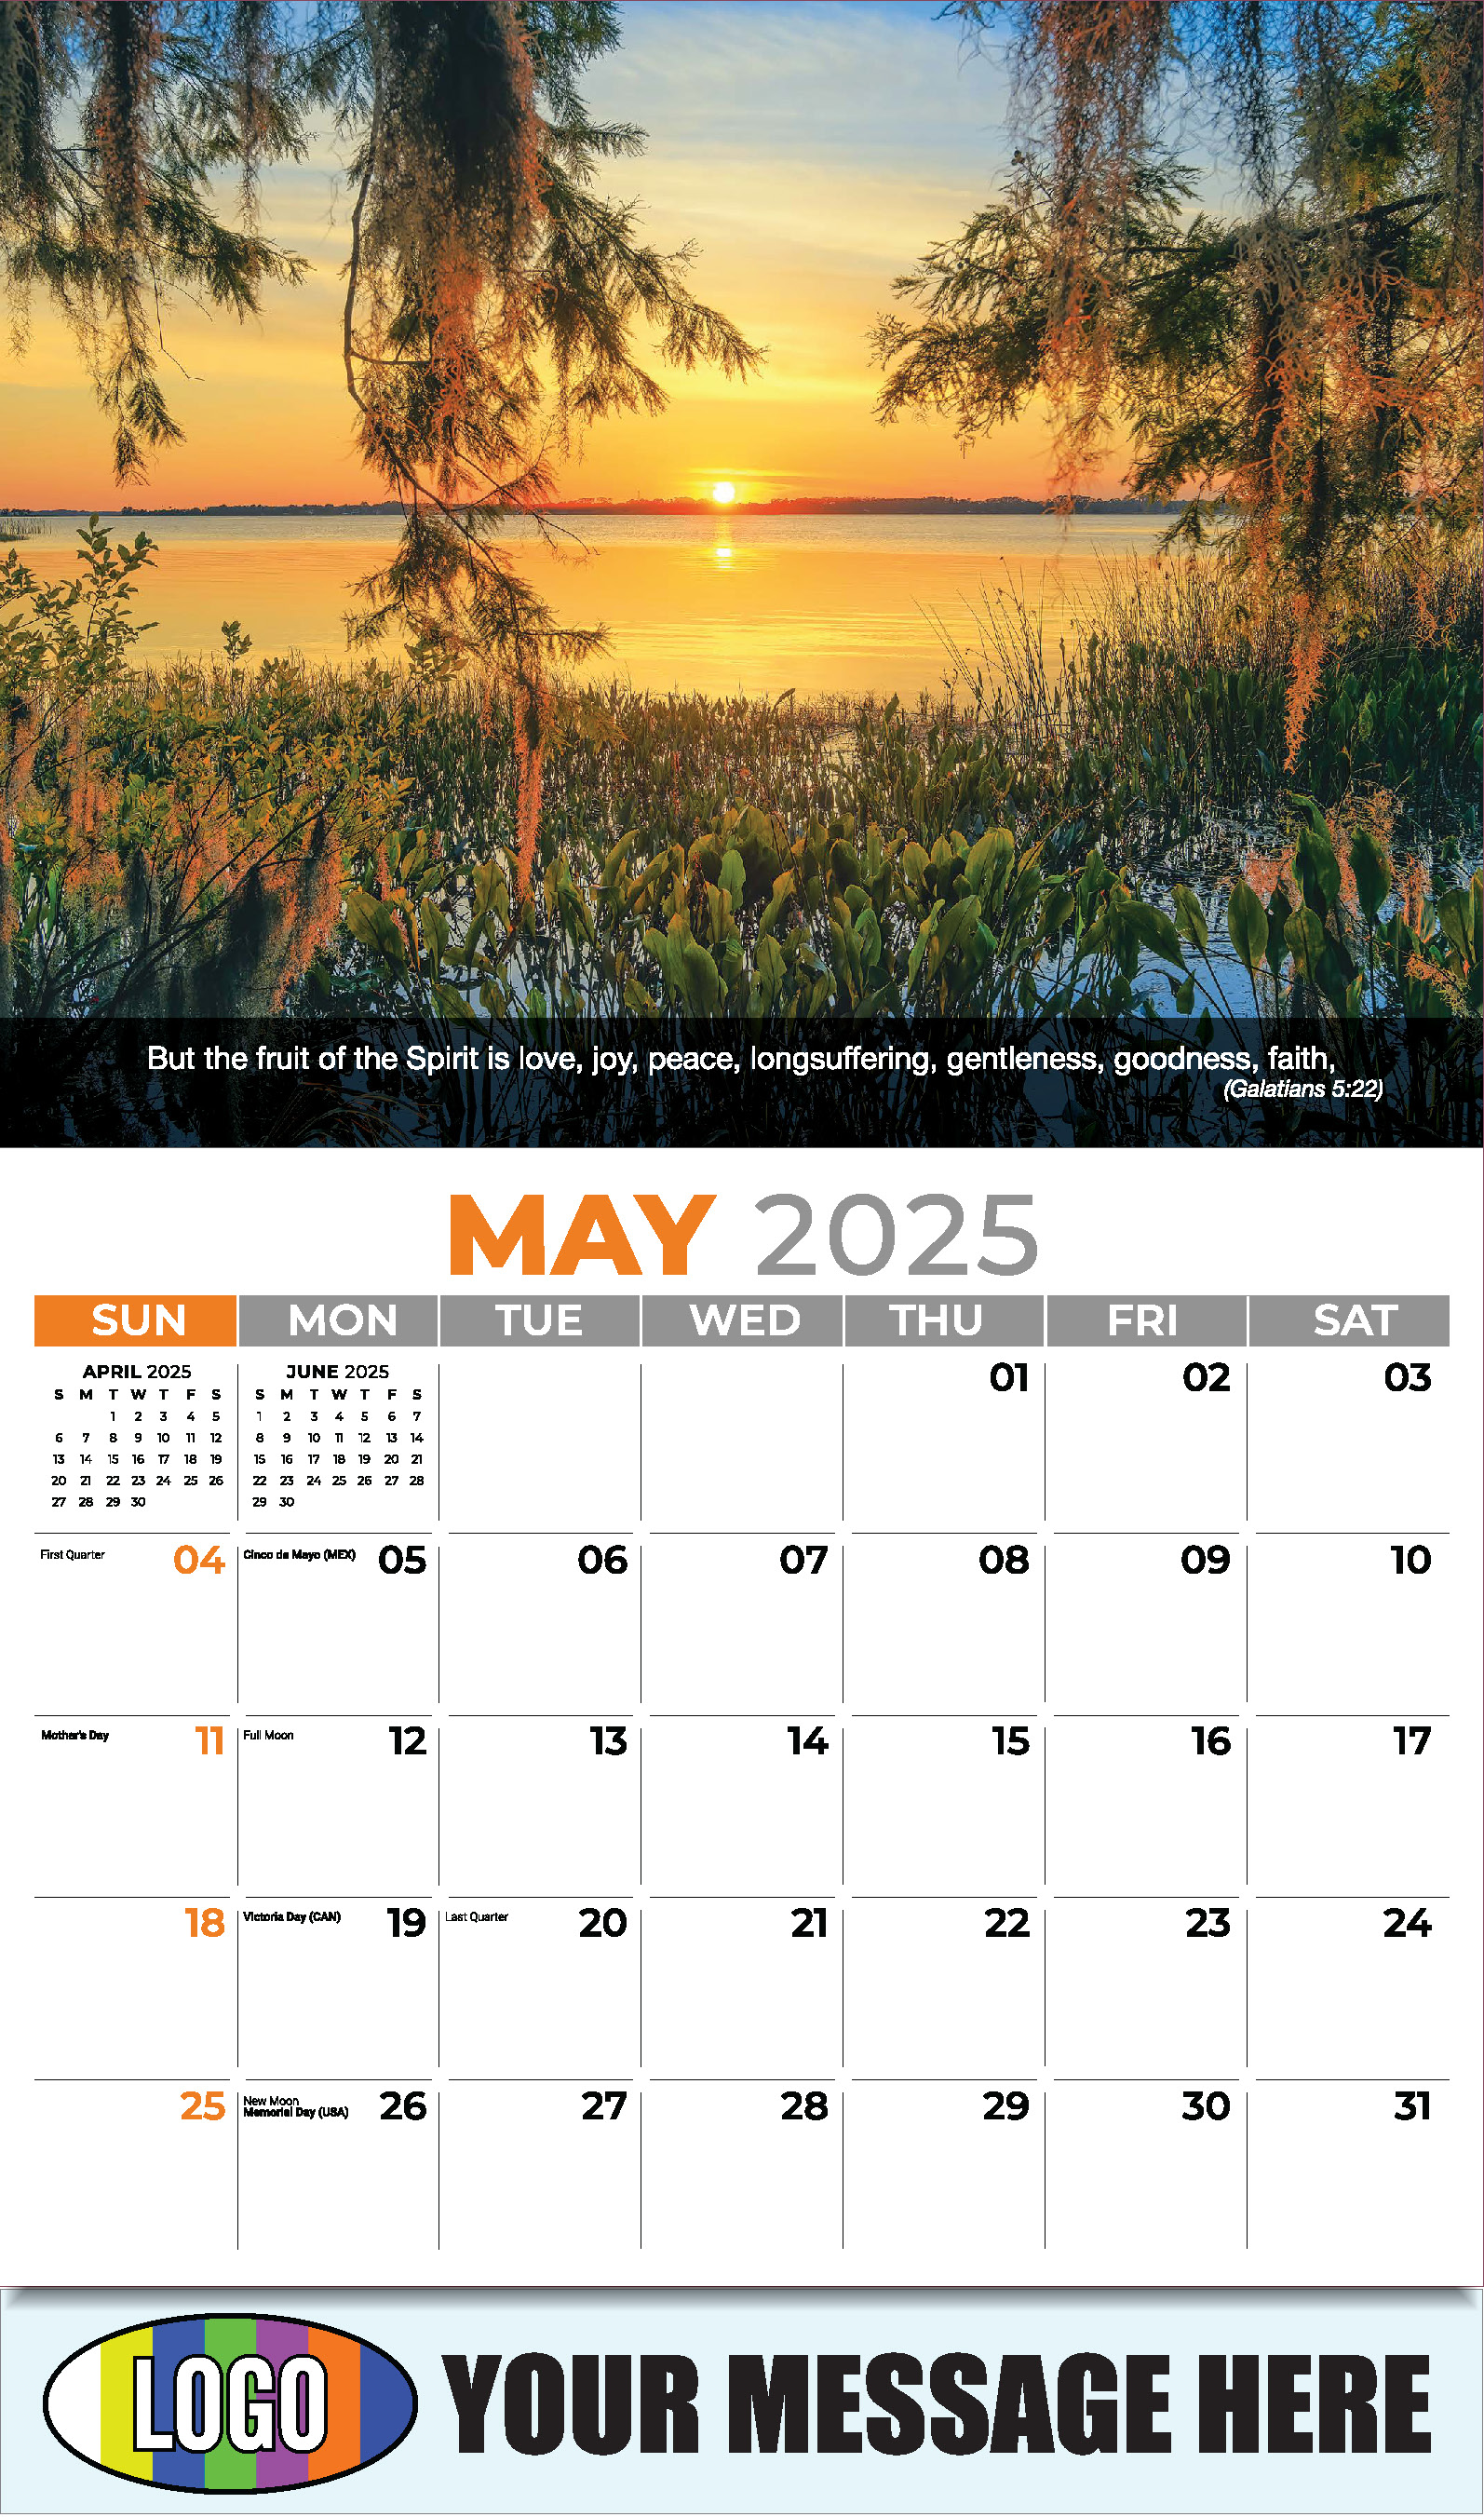 Faith Passages 2025 Christian Business Advertising Calendar - May